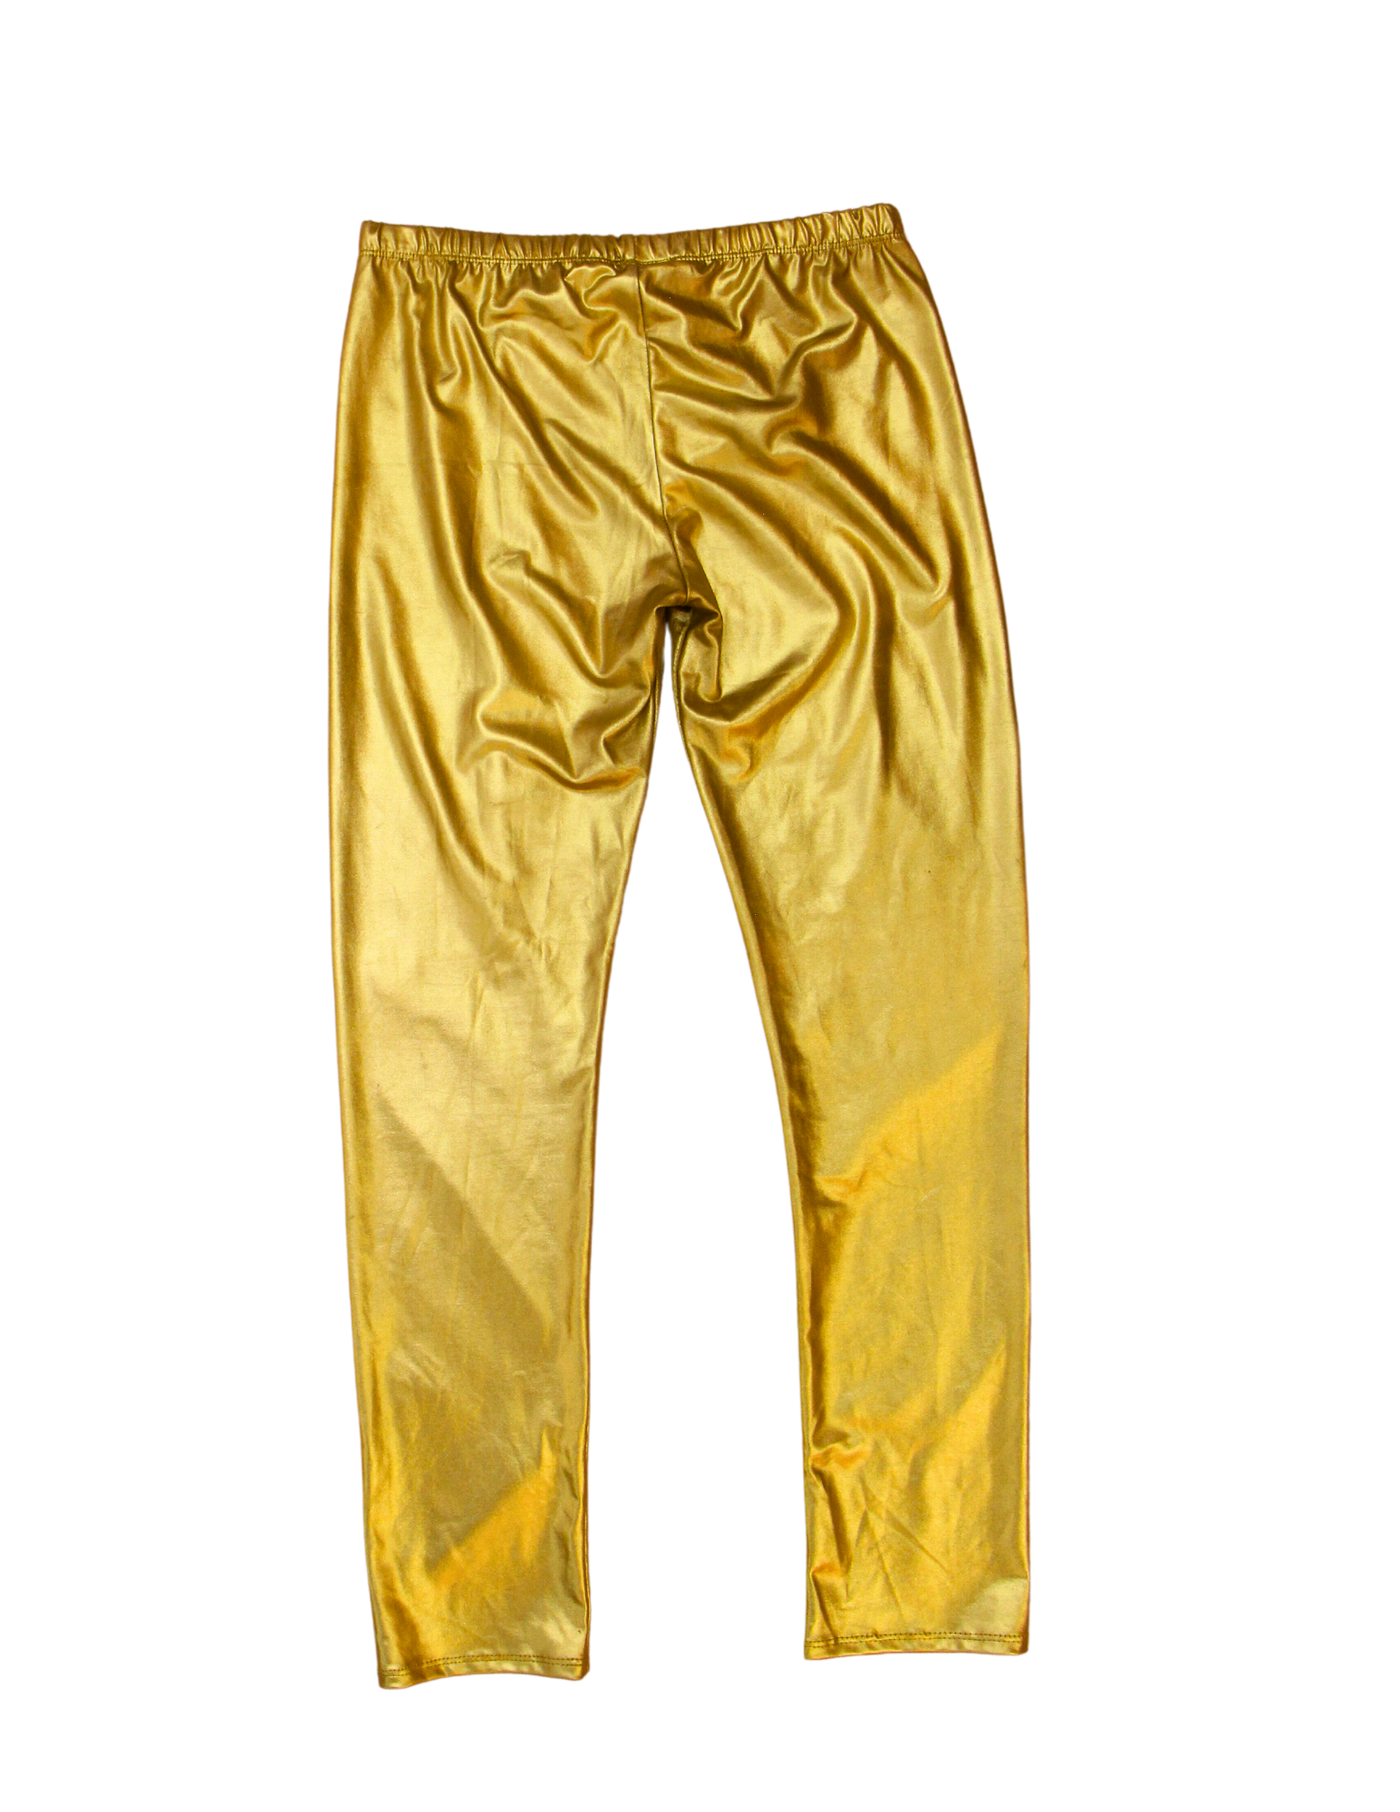 Gold Spandex Pants - Medium